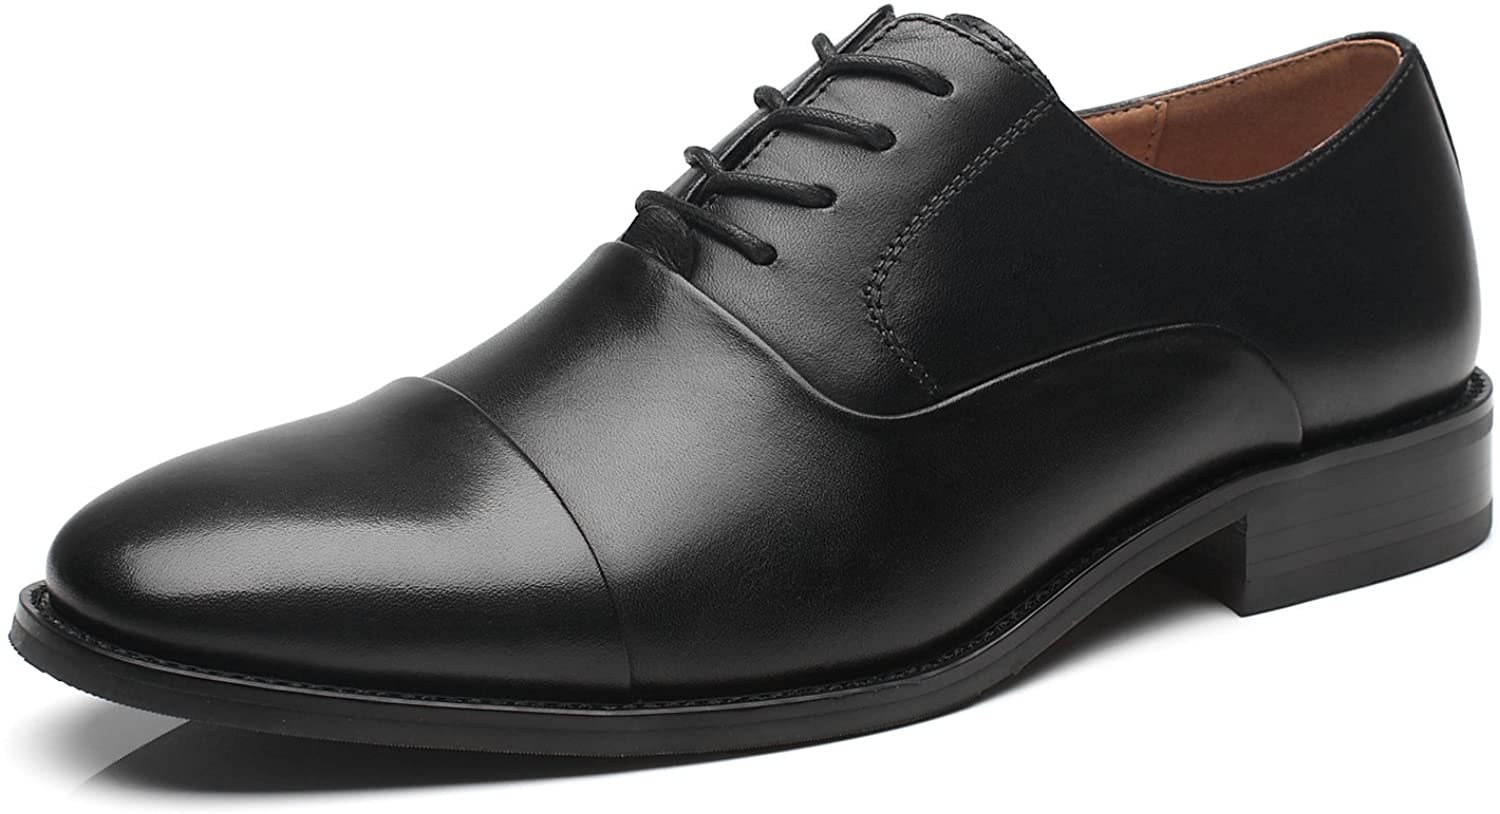 Free Shipping LA MILANO Men's Black Leather Dress Oxfords Shoes Lace Up 3E A1718 